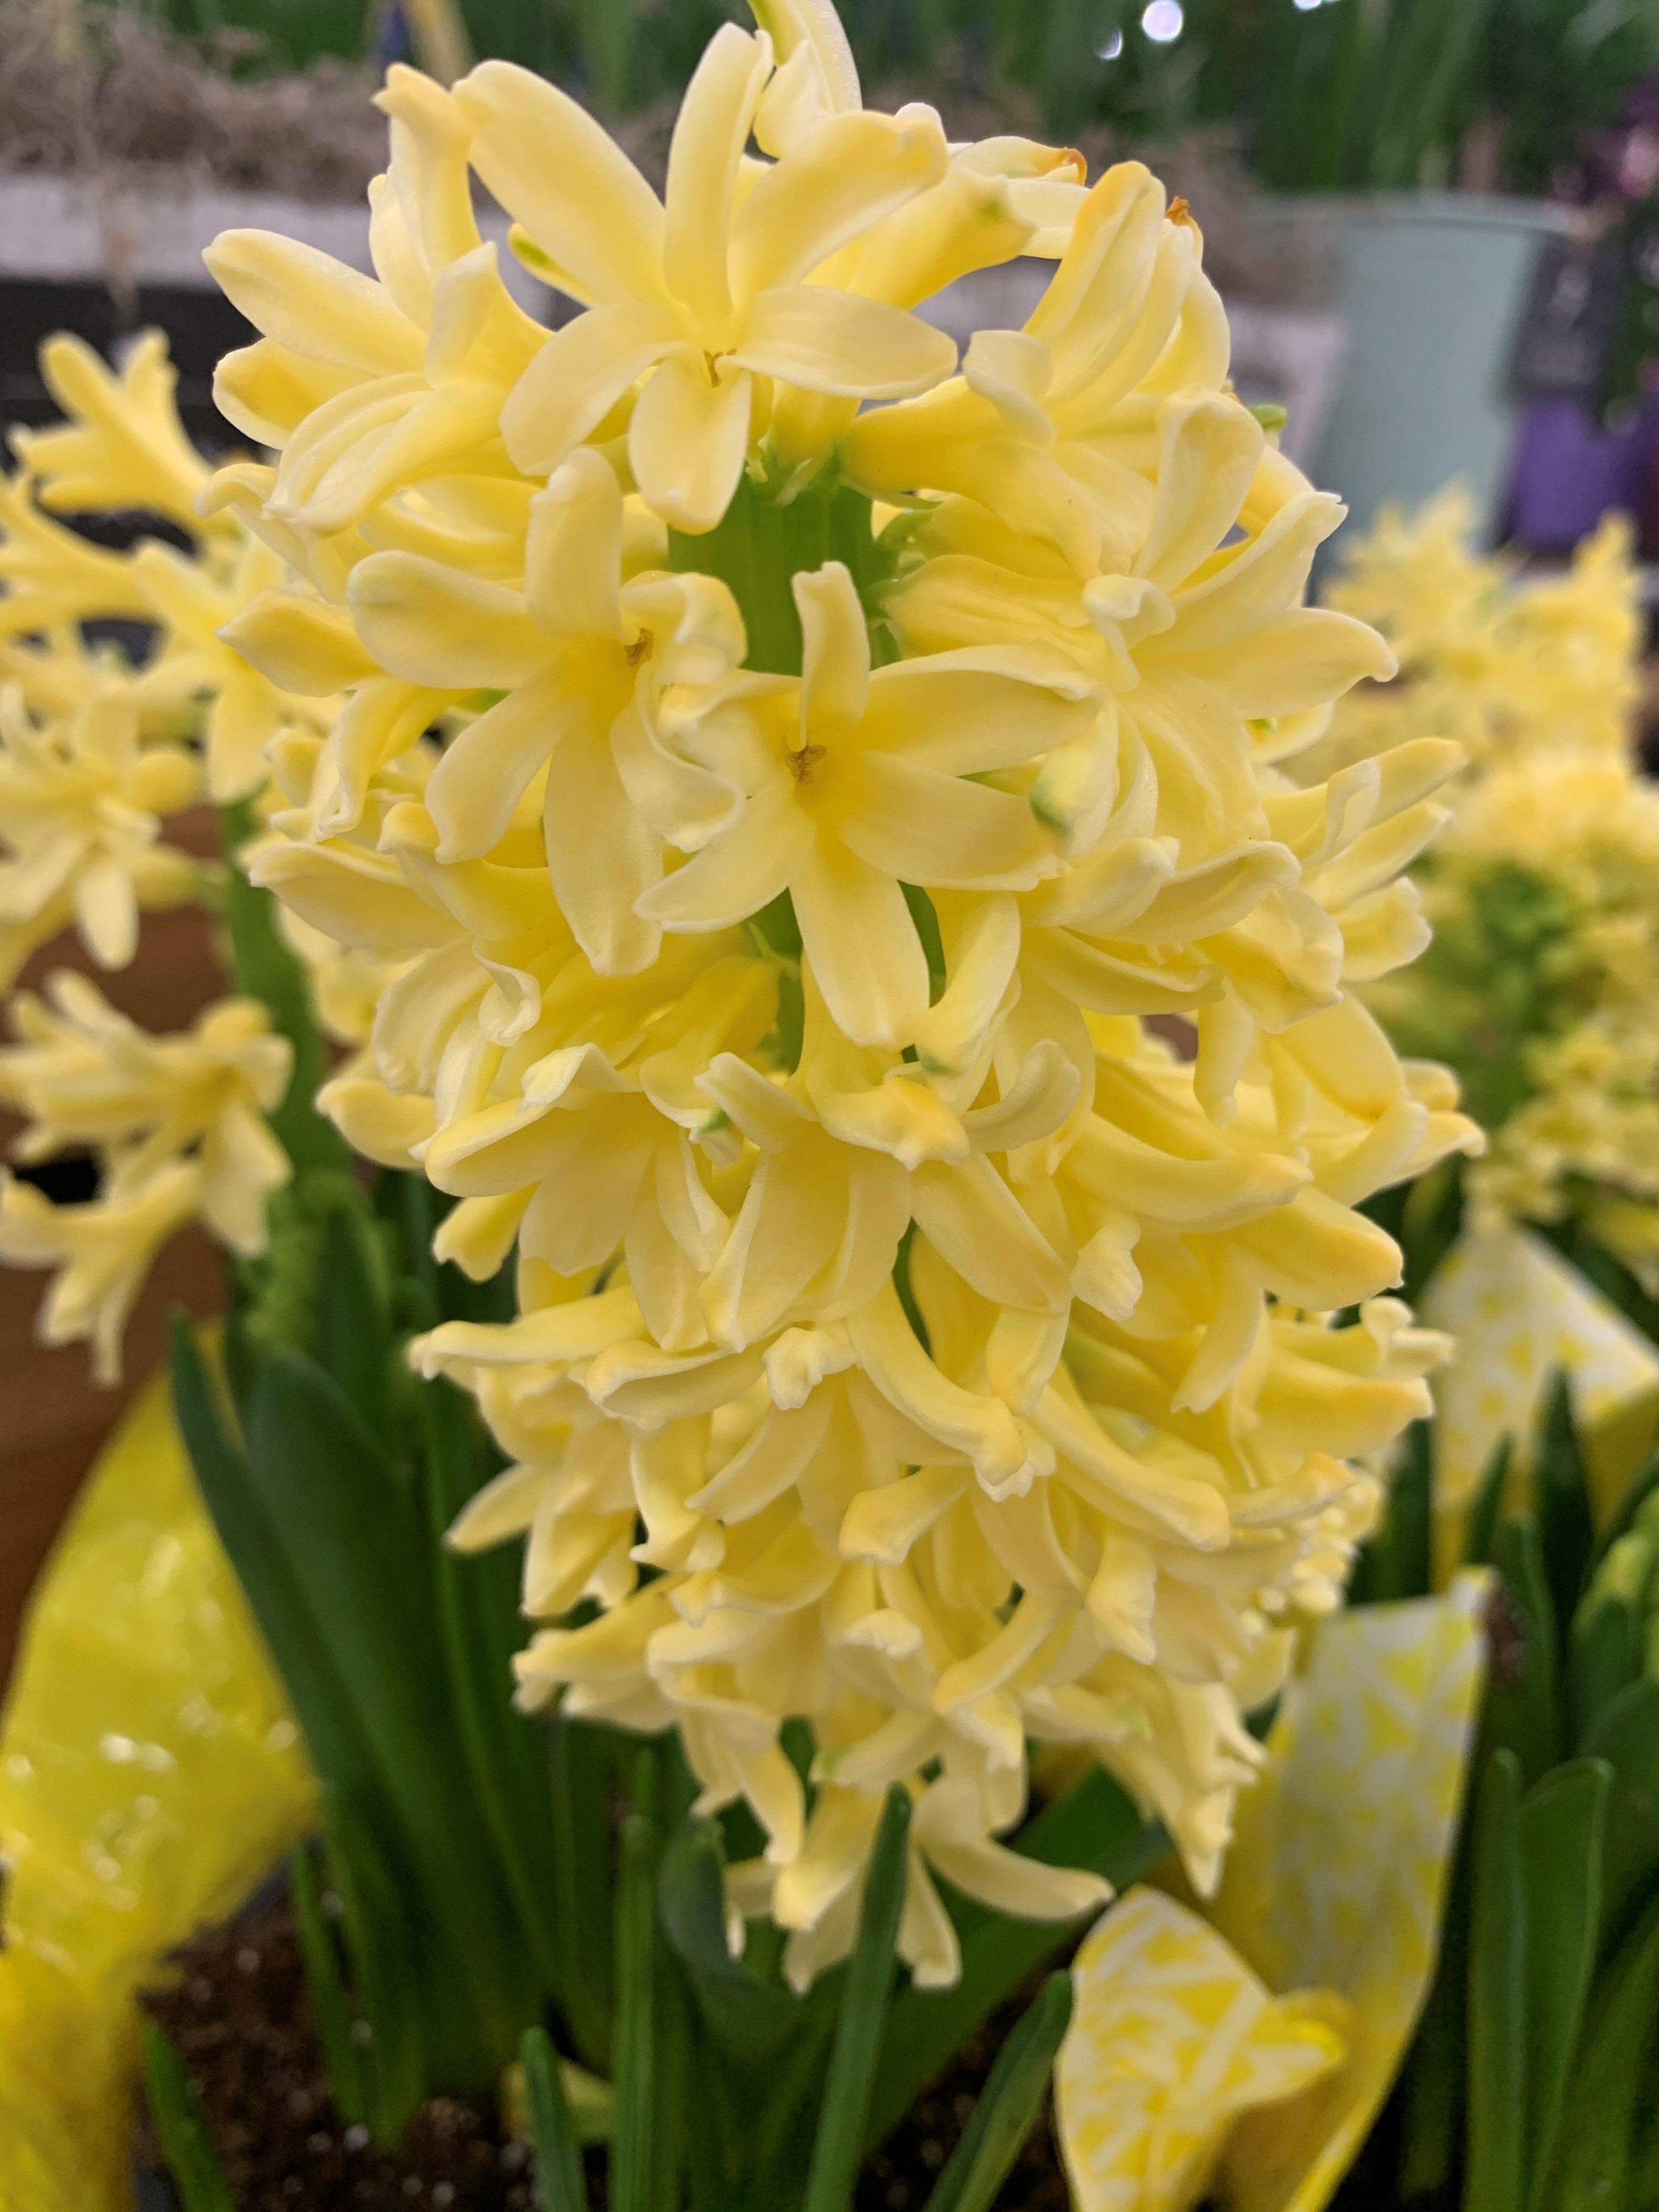 Hyacinth 'Gipsy Princess' - Hyacinth from Leo Berbee Bulb Company